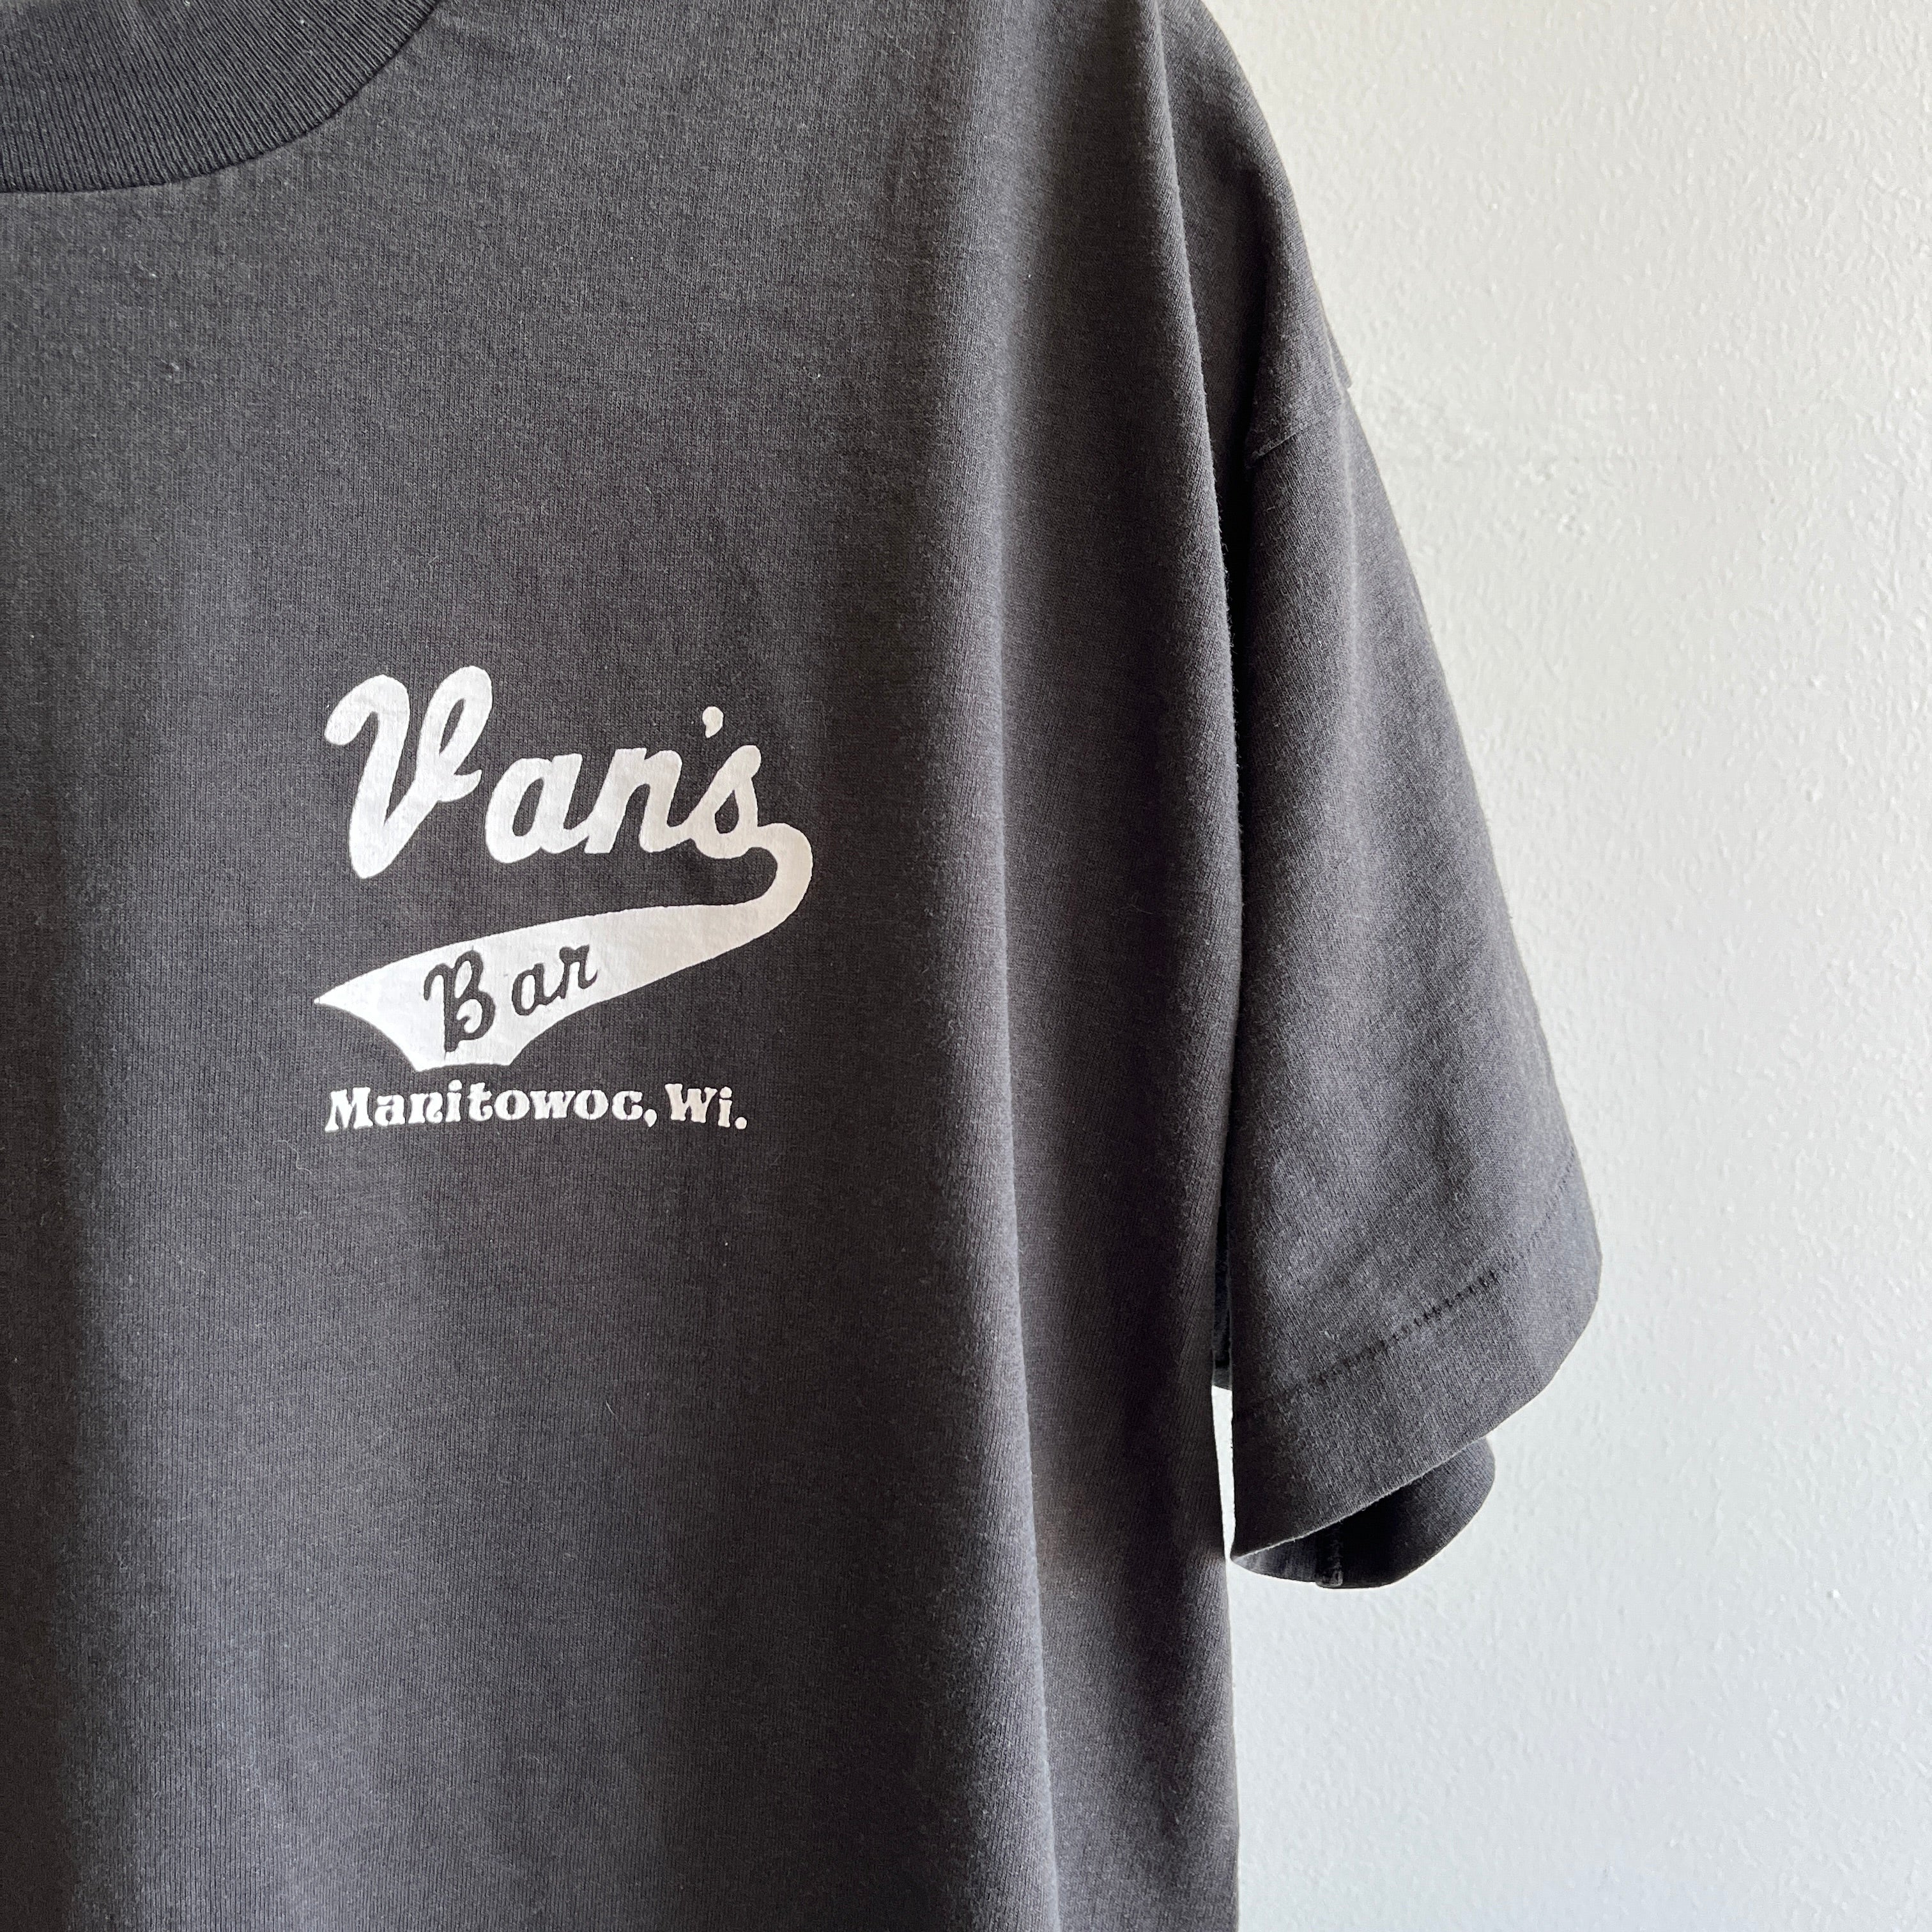 1980s Van's Bar Manitowoc, Wisconsin T-Shirt